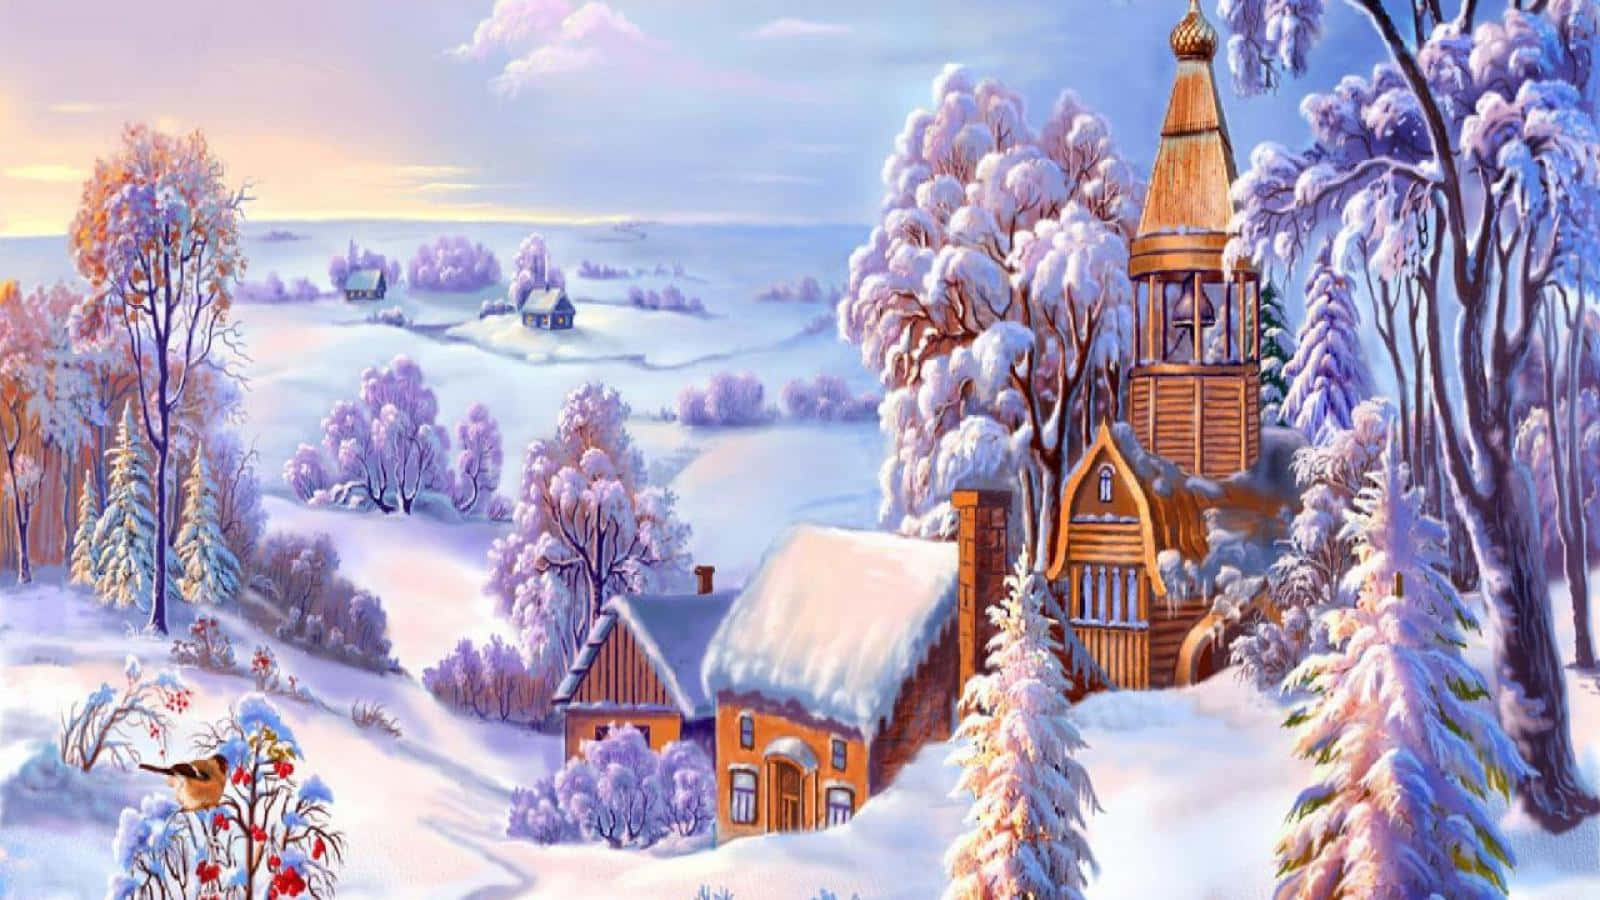 Embárcateen Una Aventura A Través Del Maravilloso Paraíso Invernal De Navidad. Fondo de pantalla